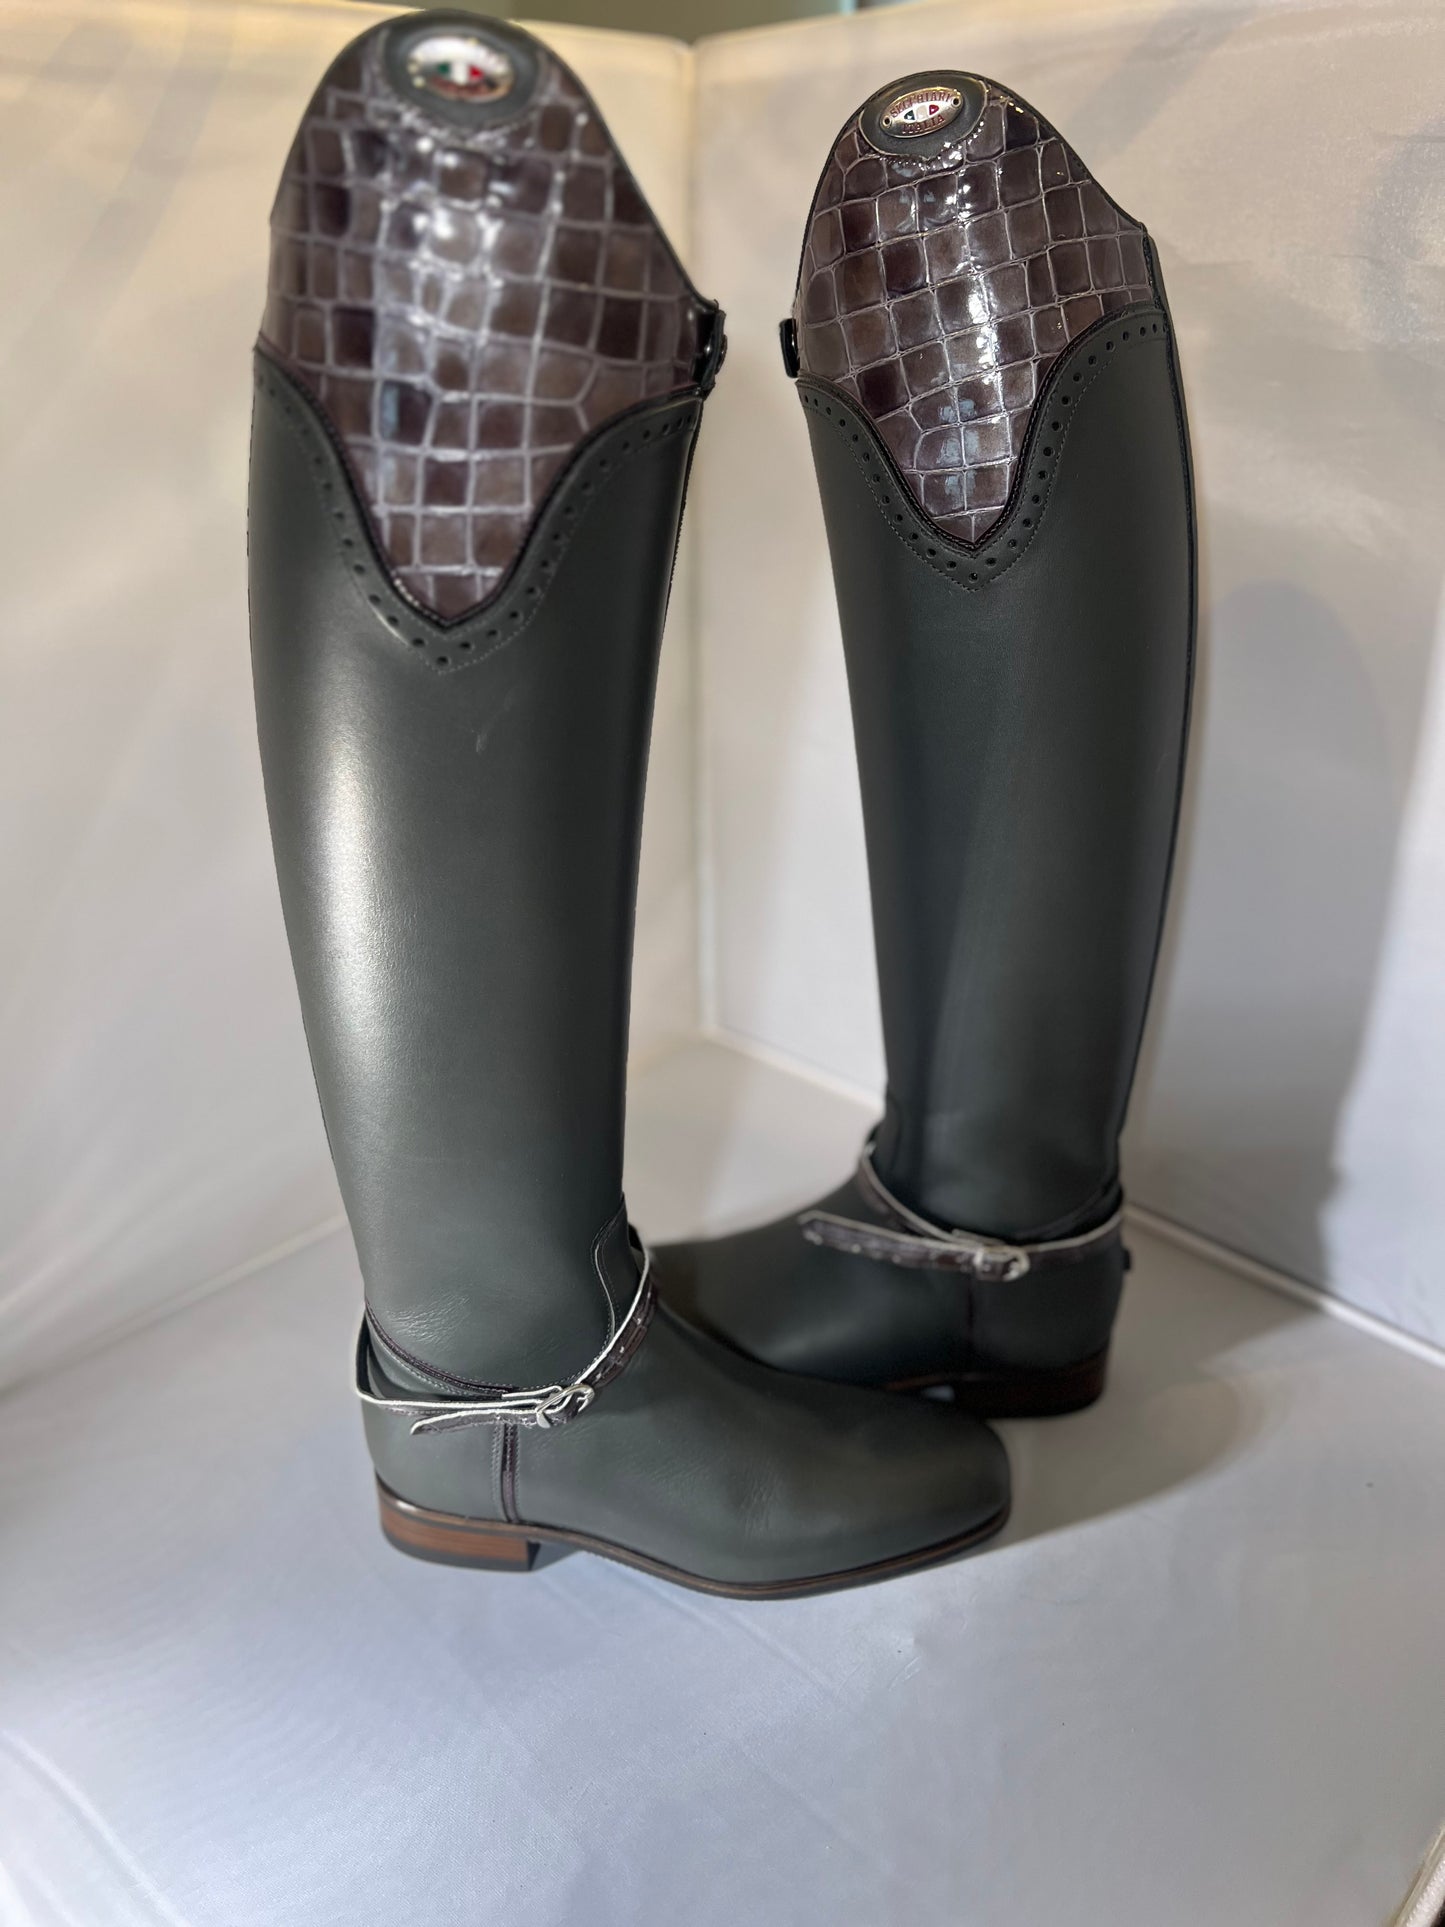 SECCHIARI BOOTS-Custom Dressage Boots